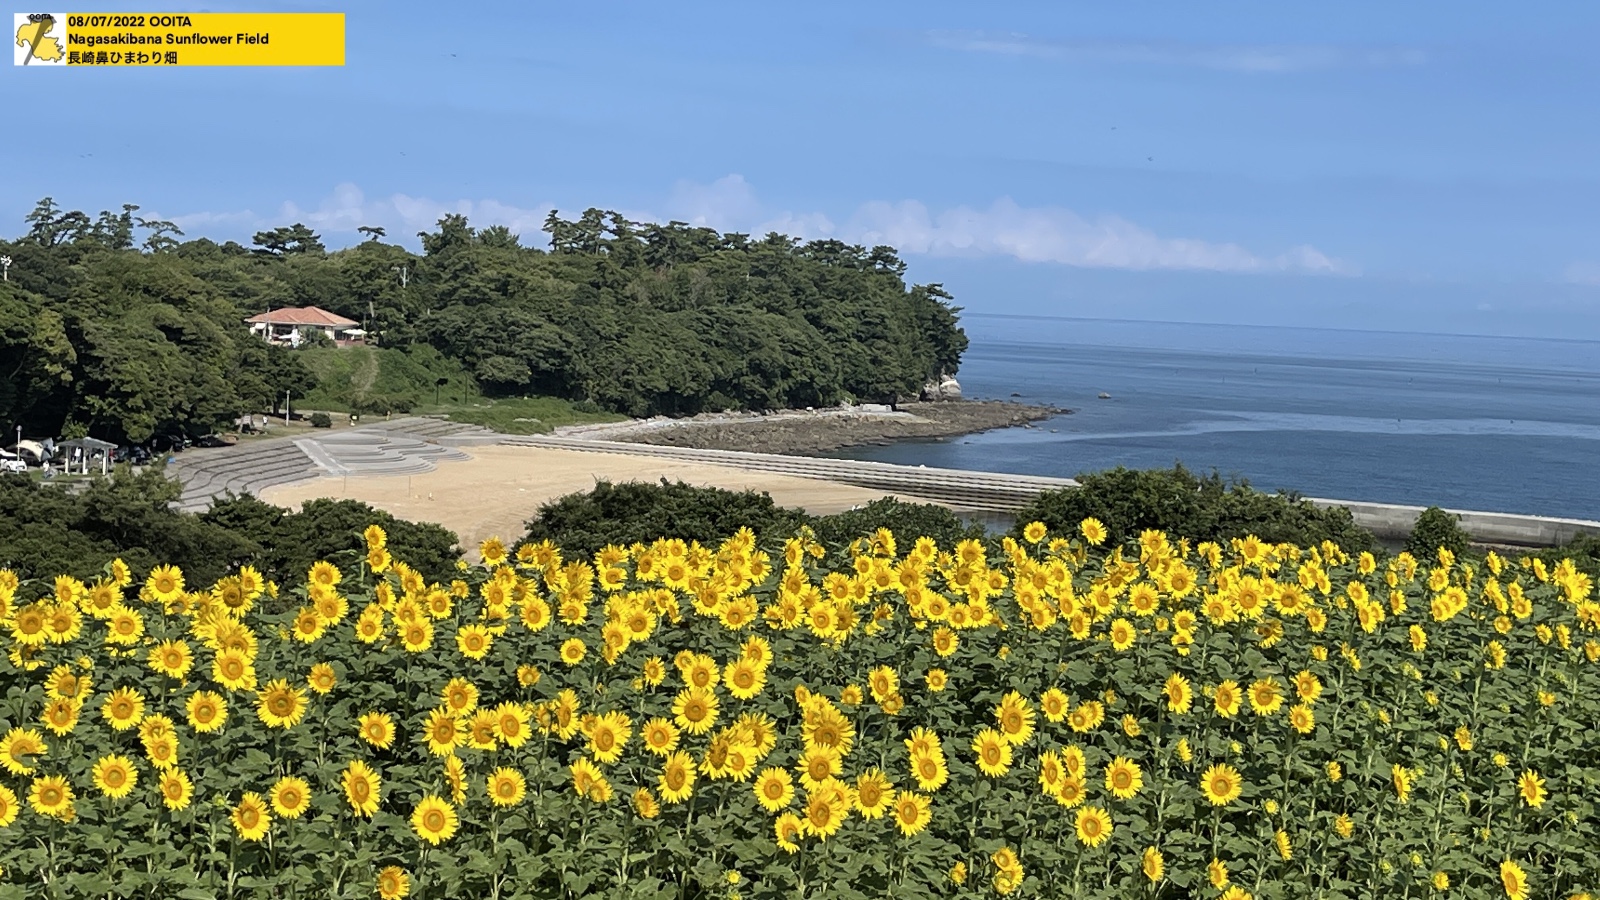 Nagasakibana Sunflower Field